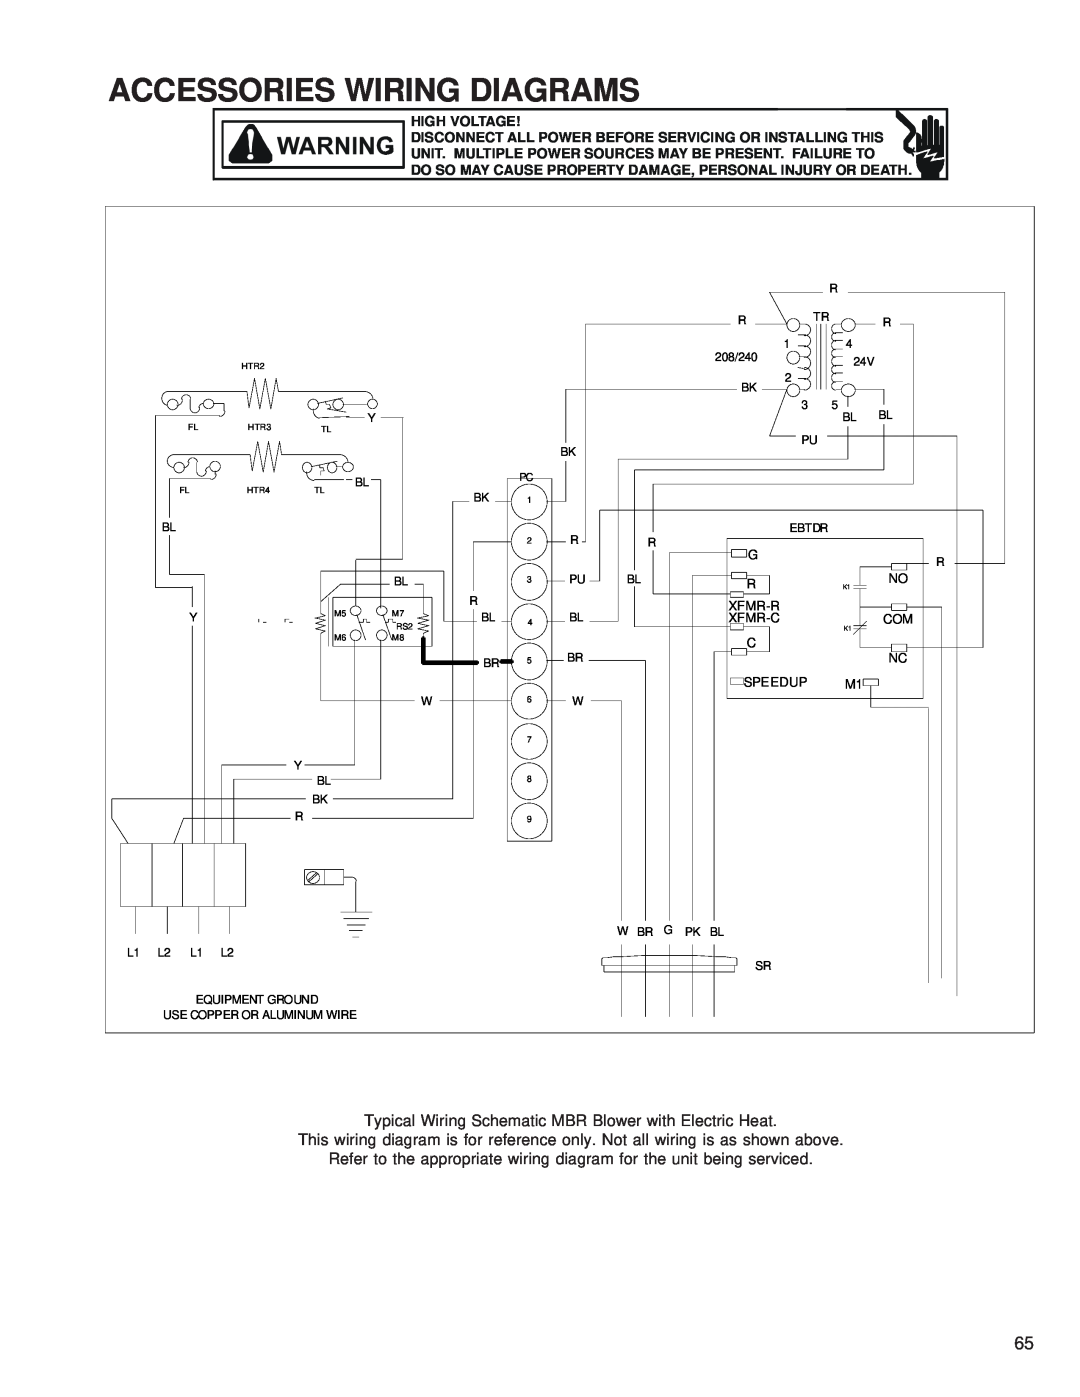 Goodman Mfg RT6100004R13 manual Accessories Wiring Diagrams, Xfmr-R, Xfmr-C, Speedup 